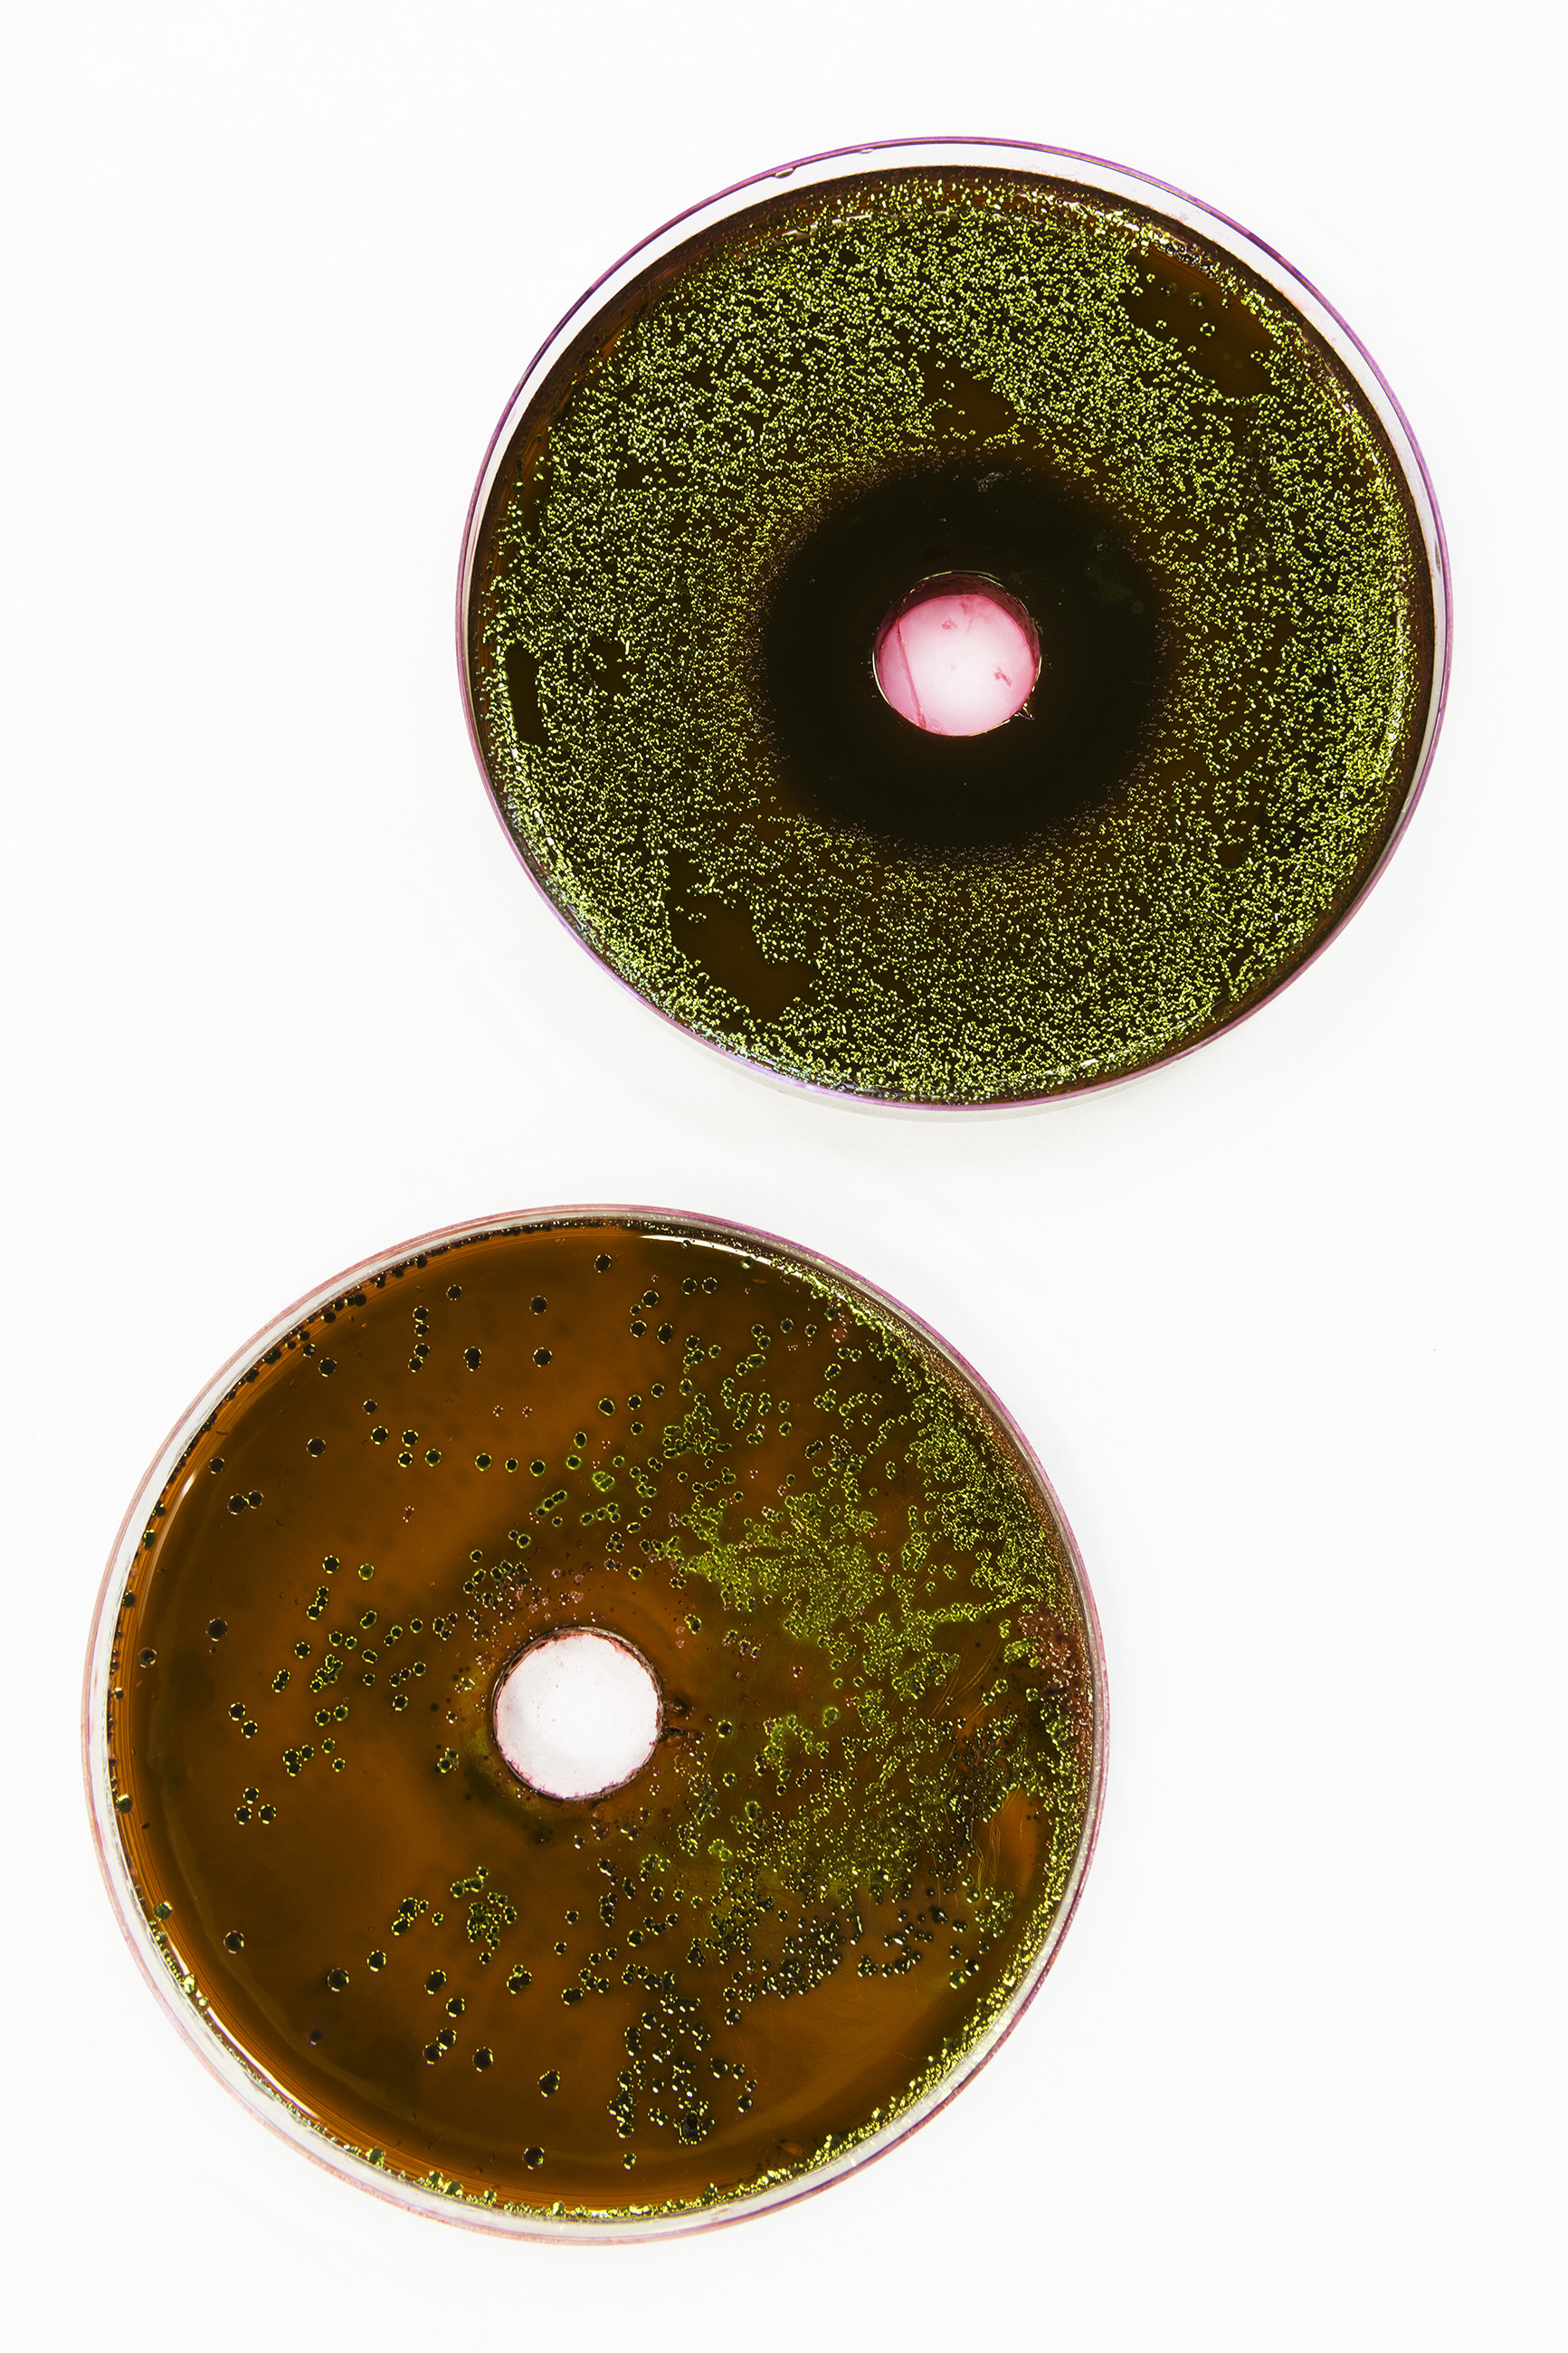 Bacteria growing on emb agar photo